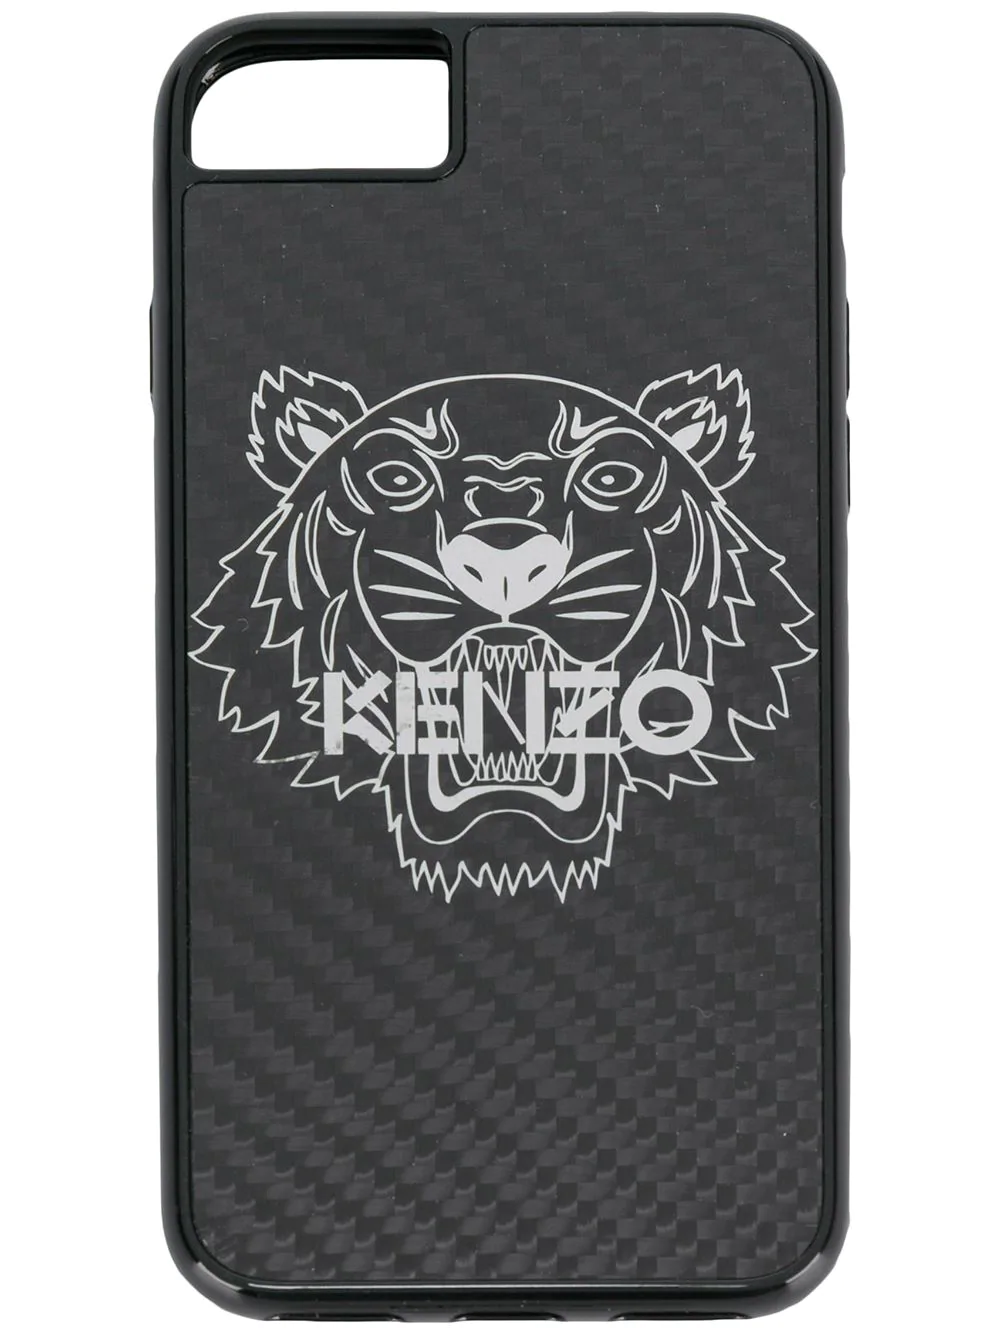 tiger case iphone 7